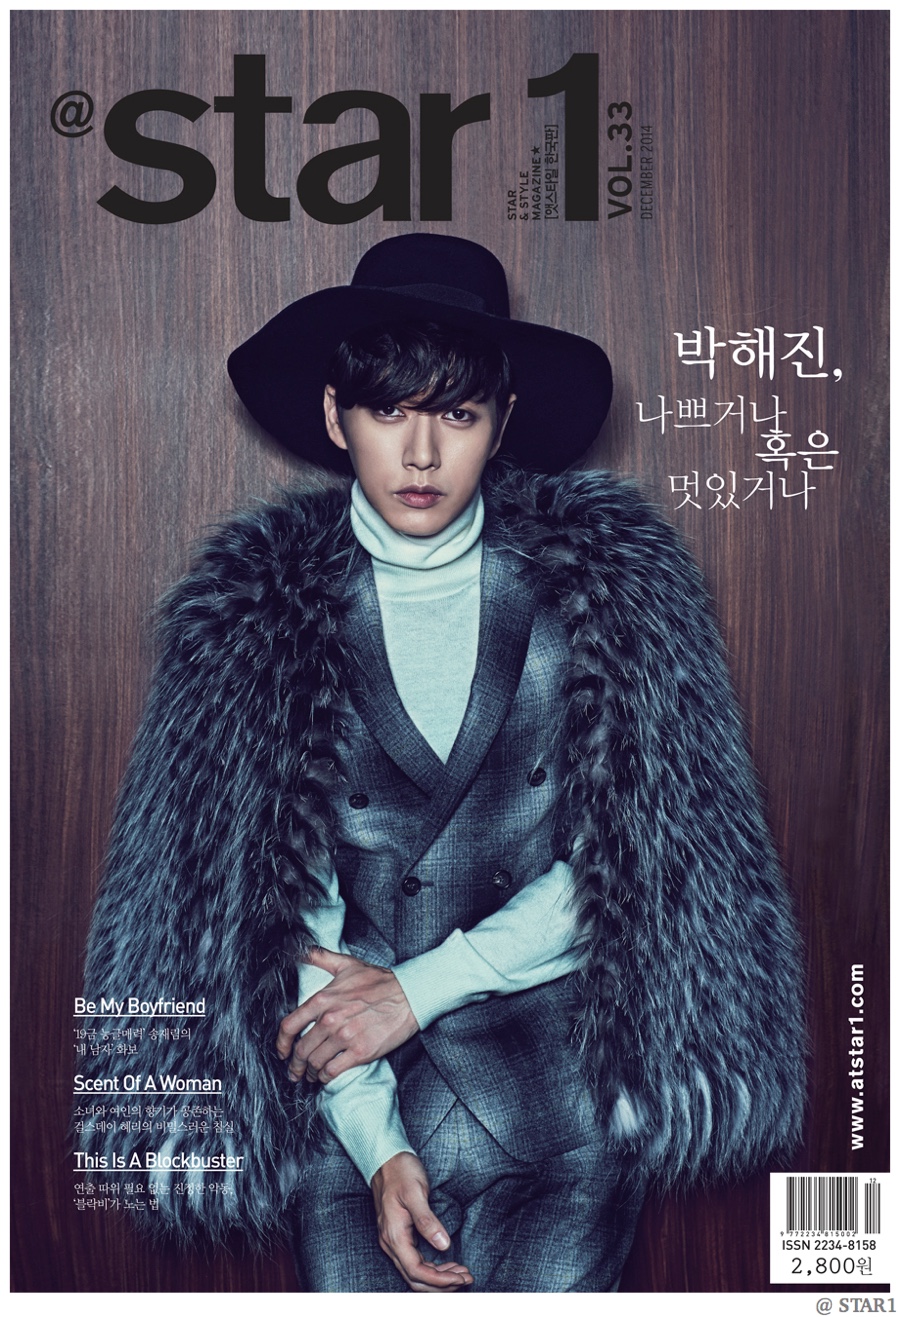 Park Hae Jin Star1 December 2014 Cover Photo Shoot 001